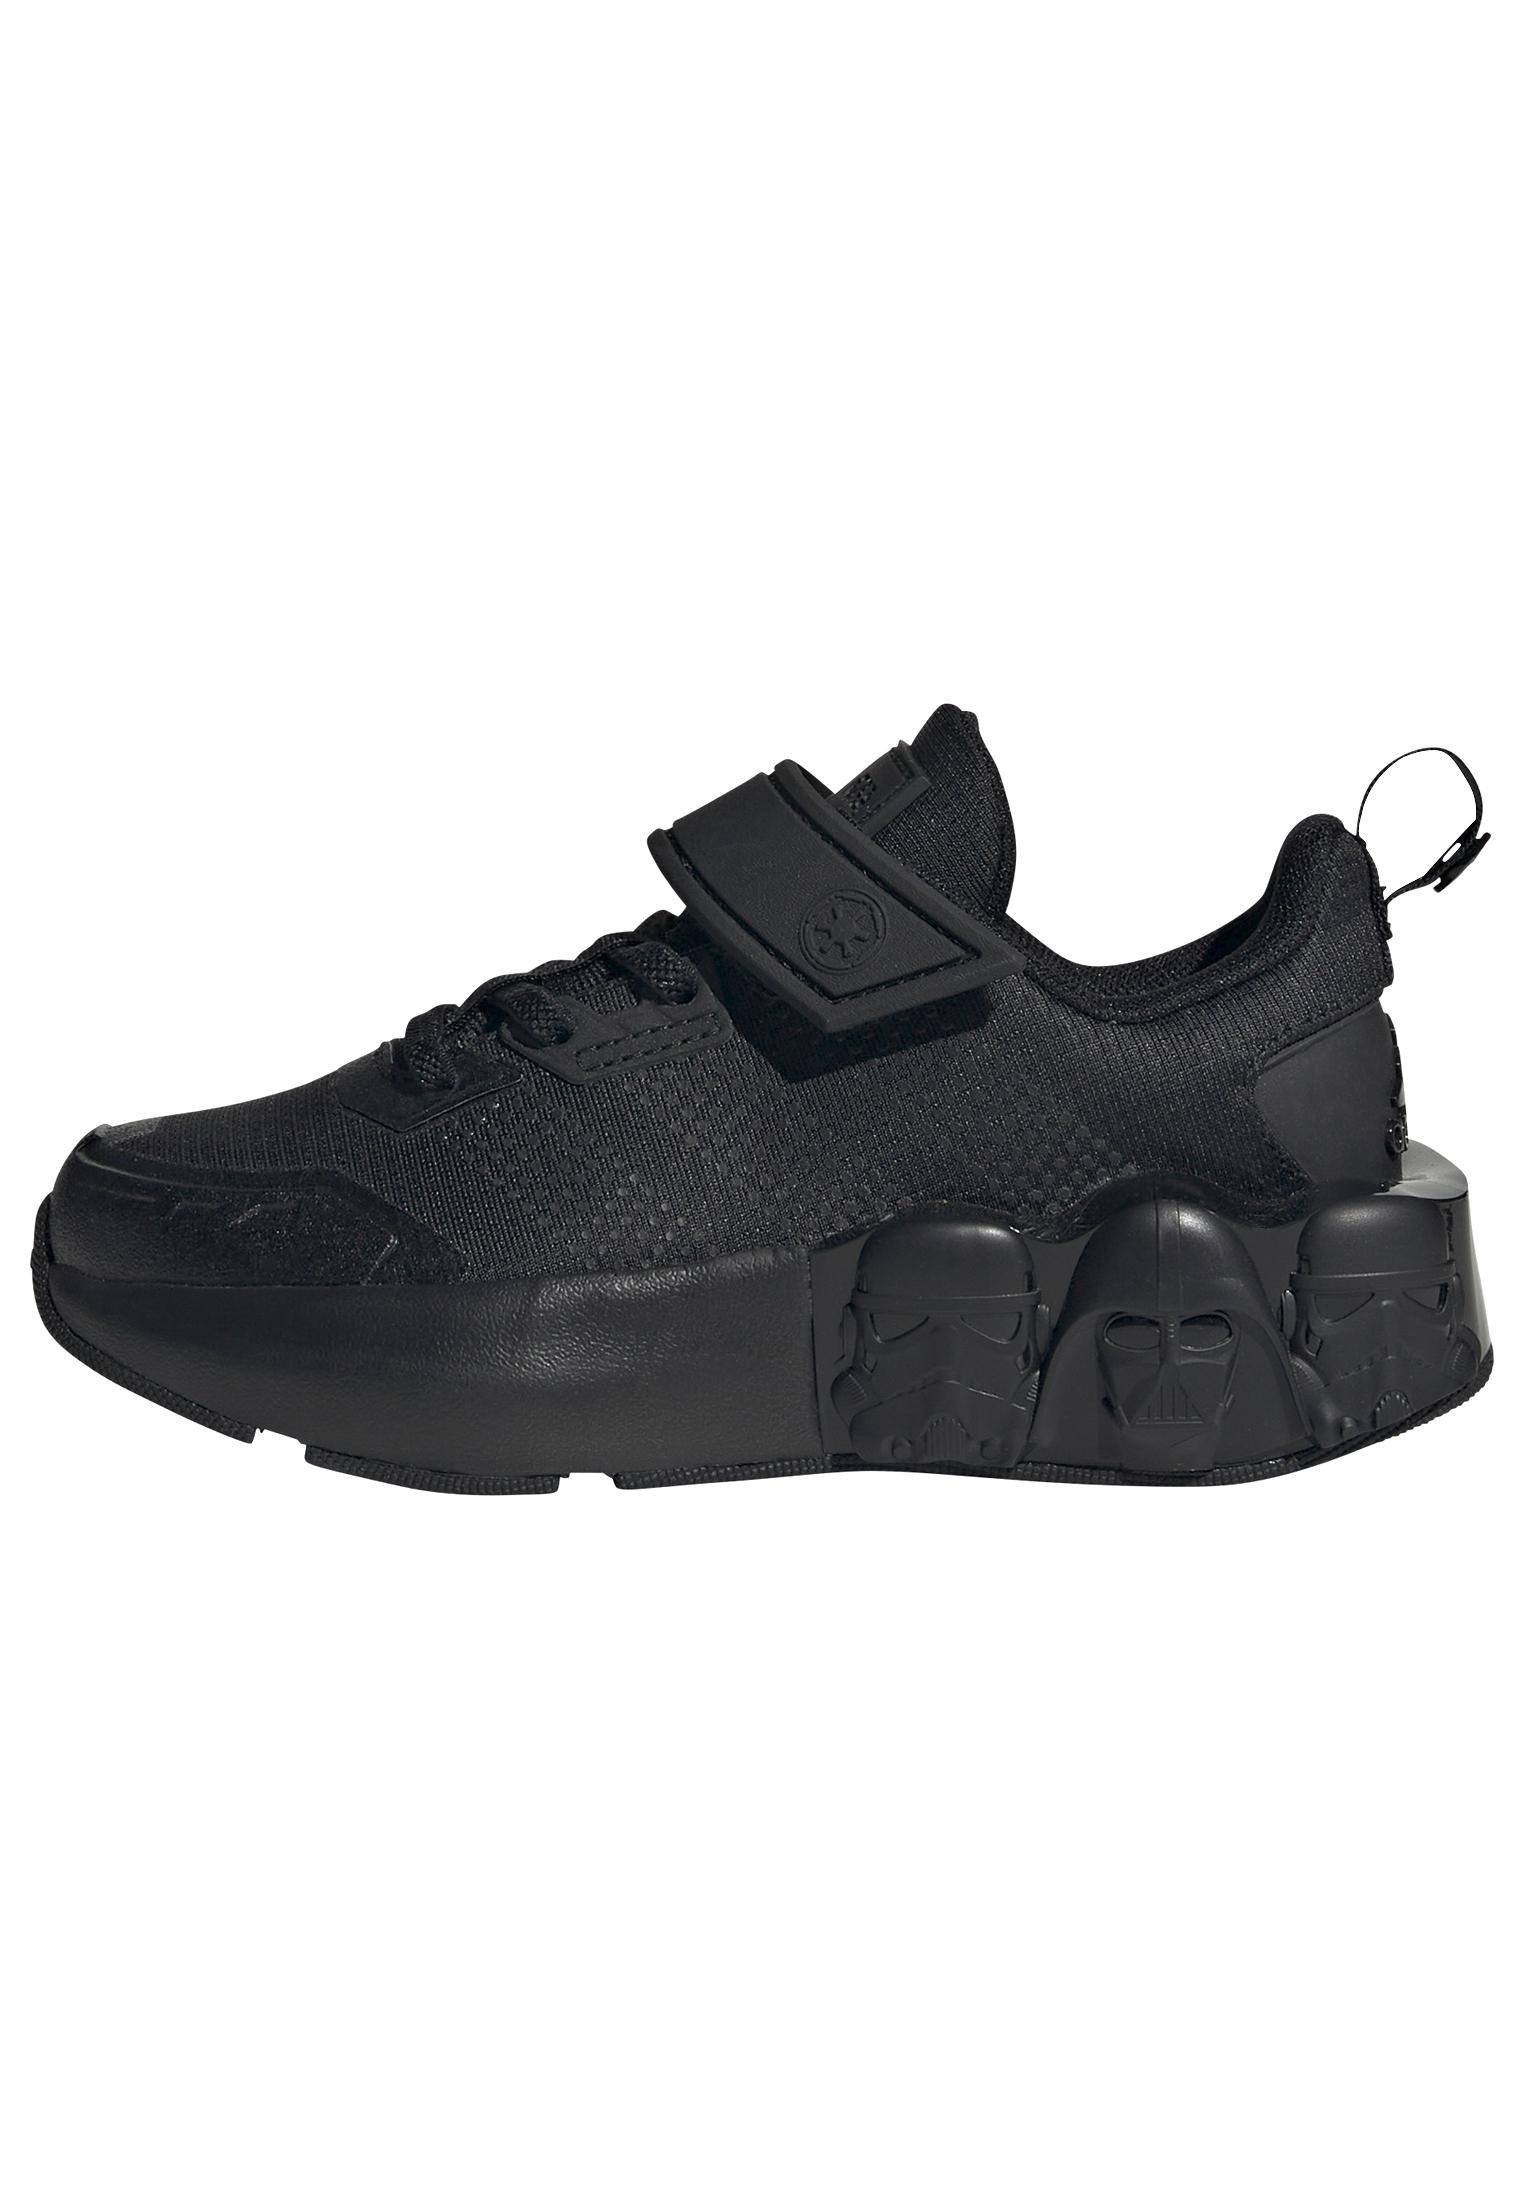 adidas - Unisex Kids Star Wars Runner Shoes, Black